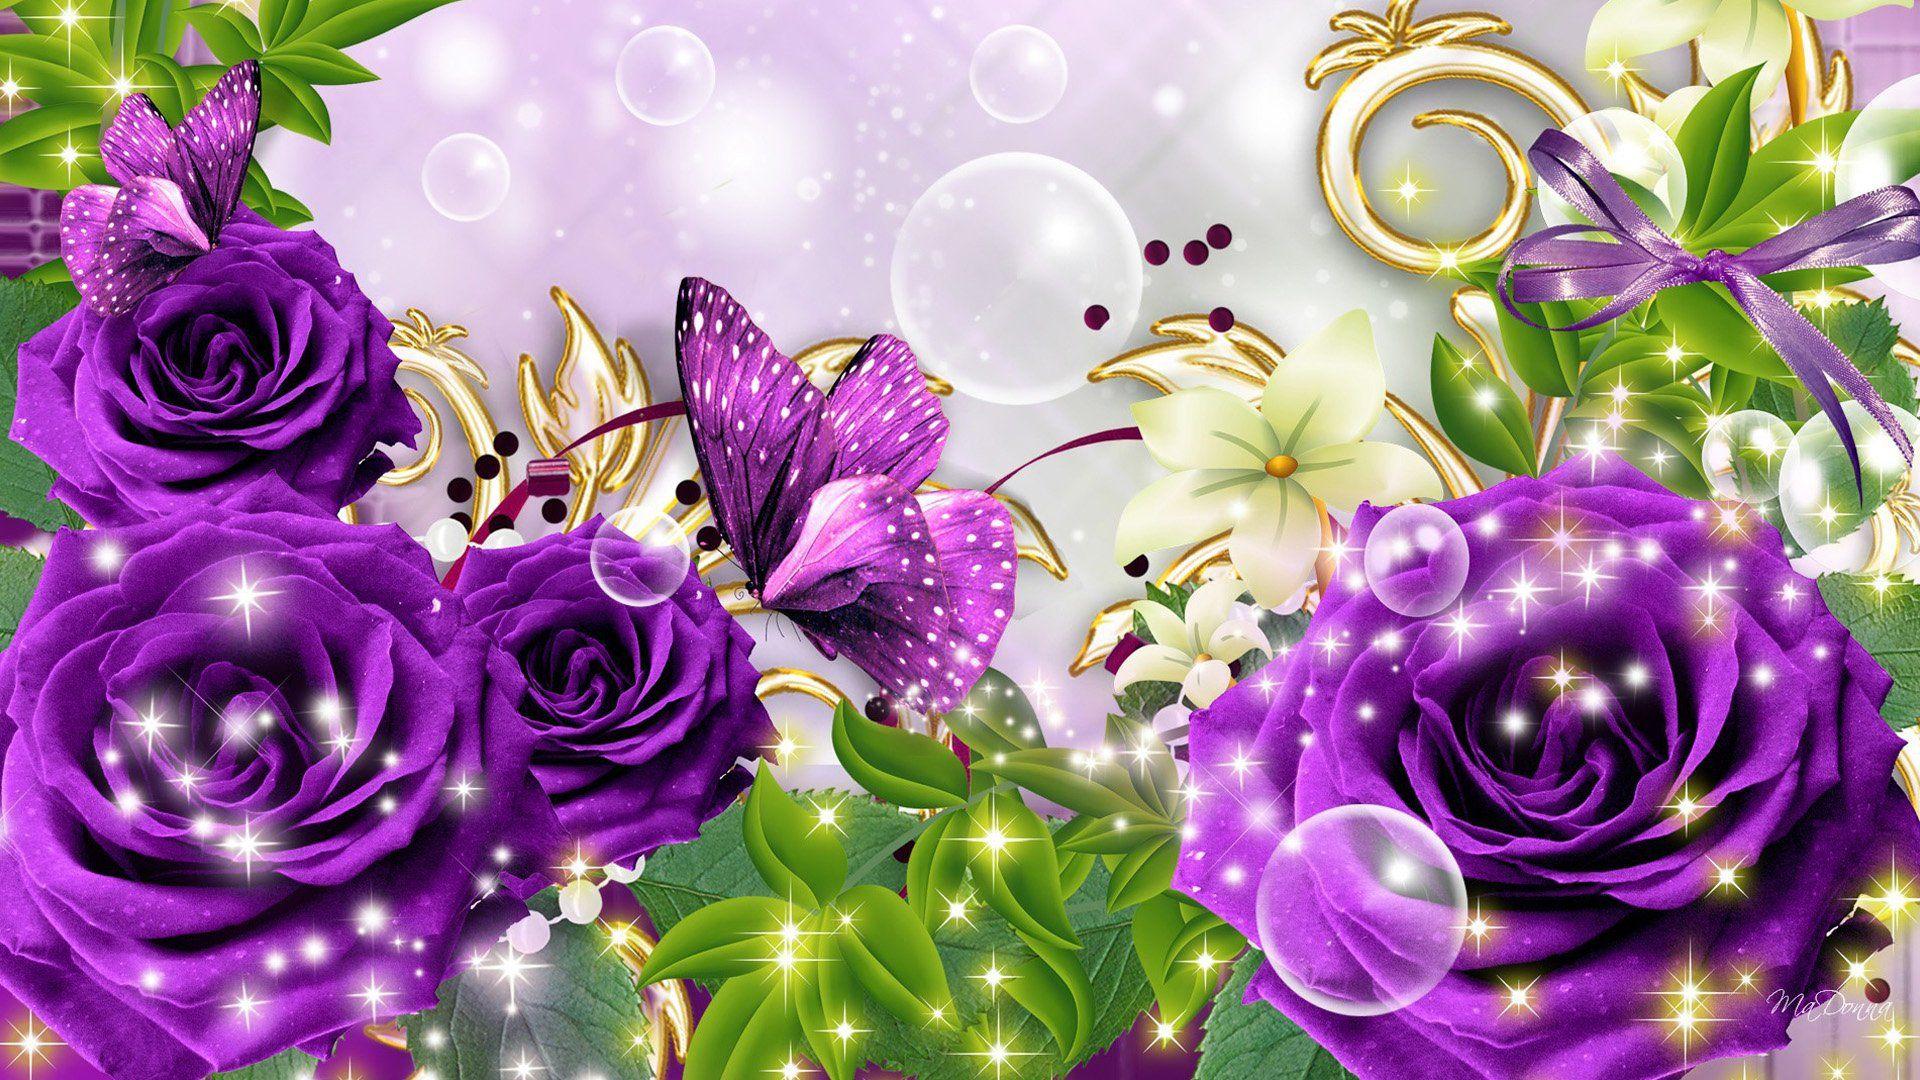 Purple Roses and Butterflies HD Wallpaper